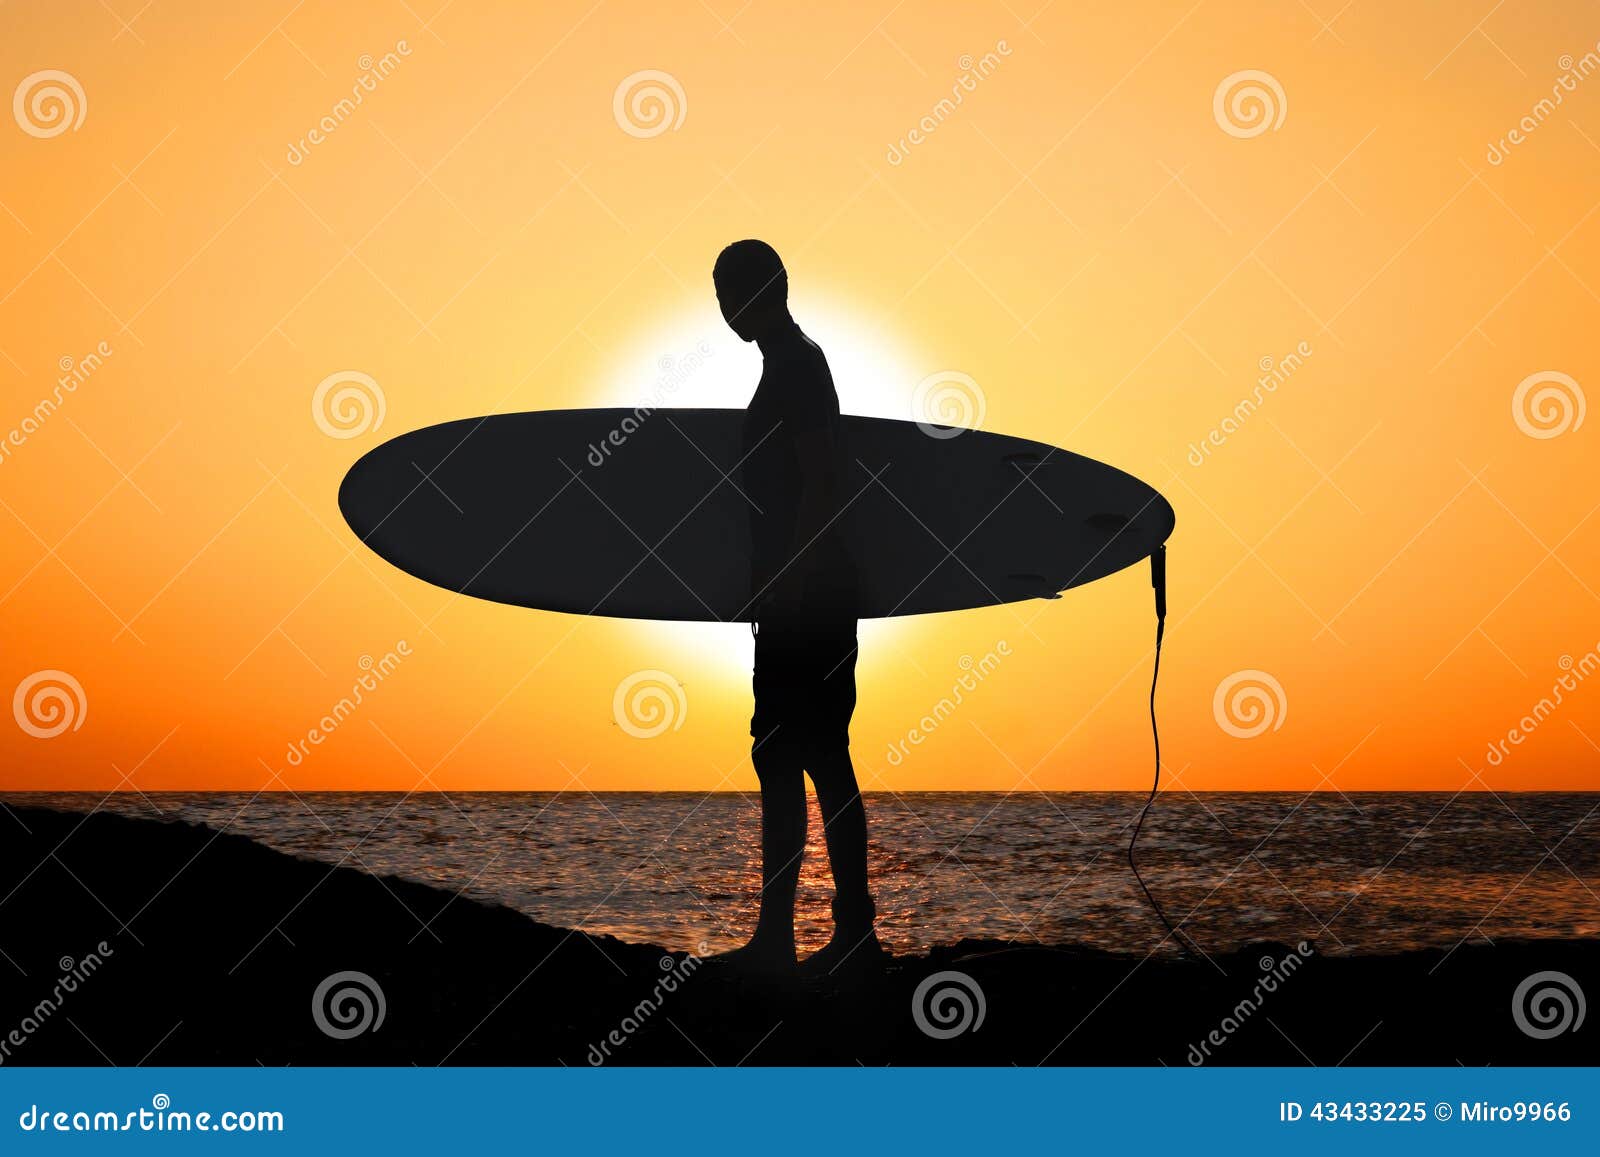 surfer at sundown